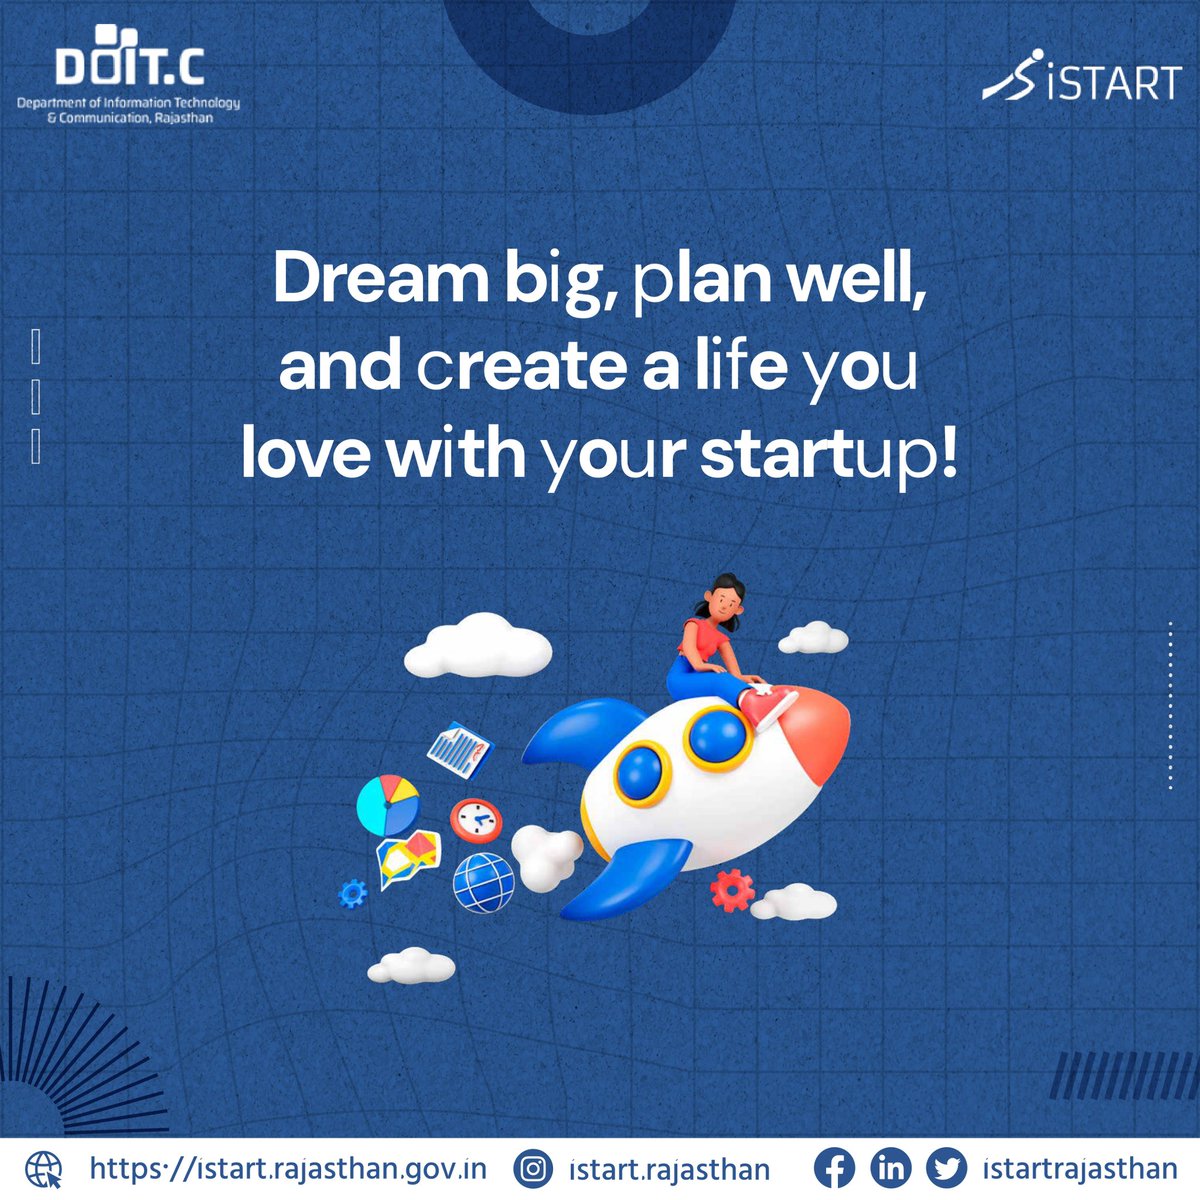 #iStartRajasthan #iStart #Entrepreneurship #Startup #StartupTips #StartupLife #DreamBigPlanWell